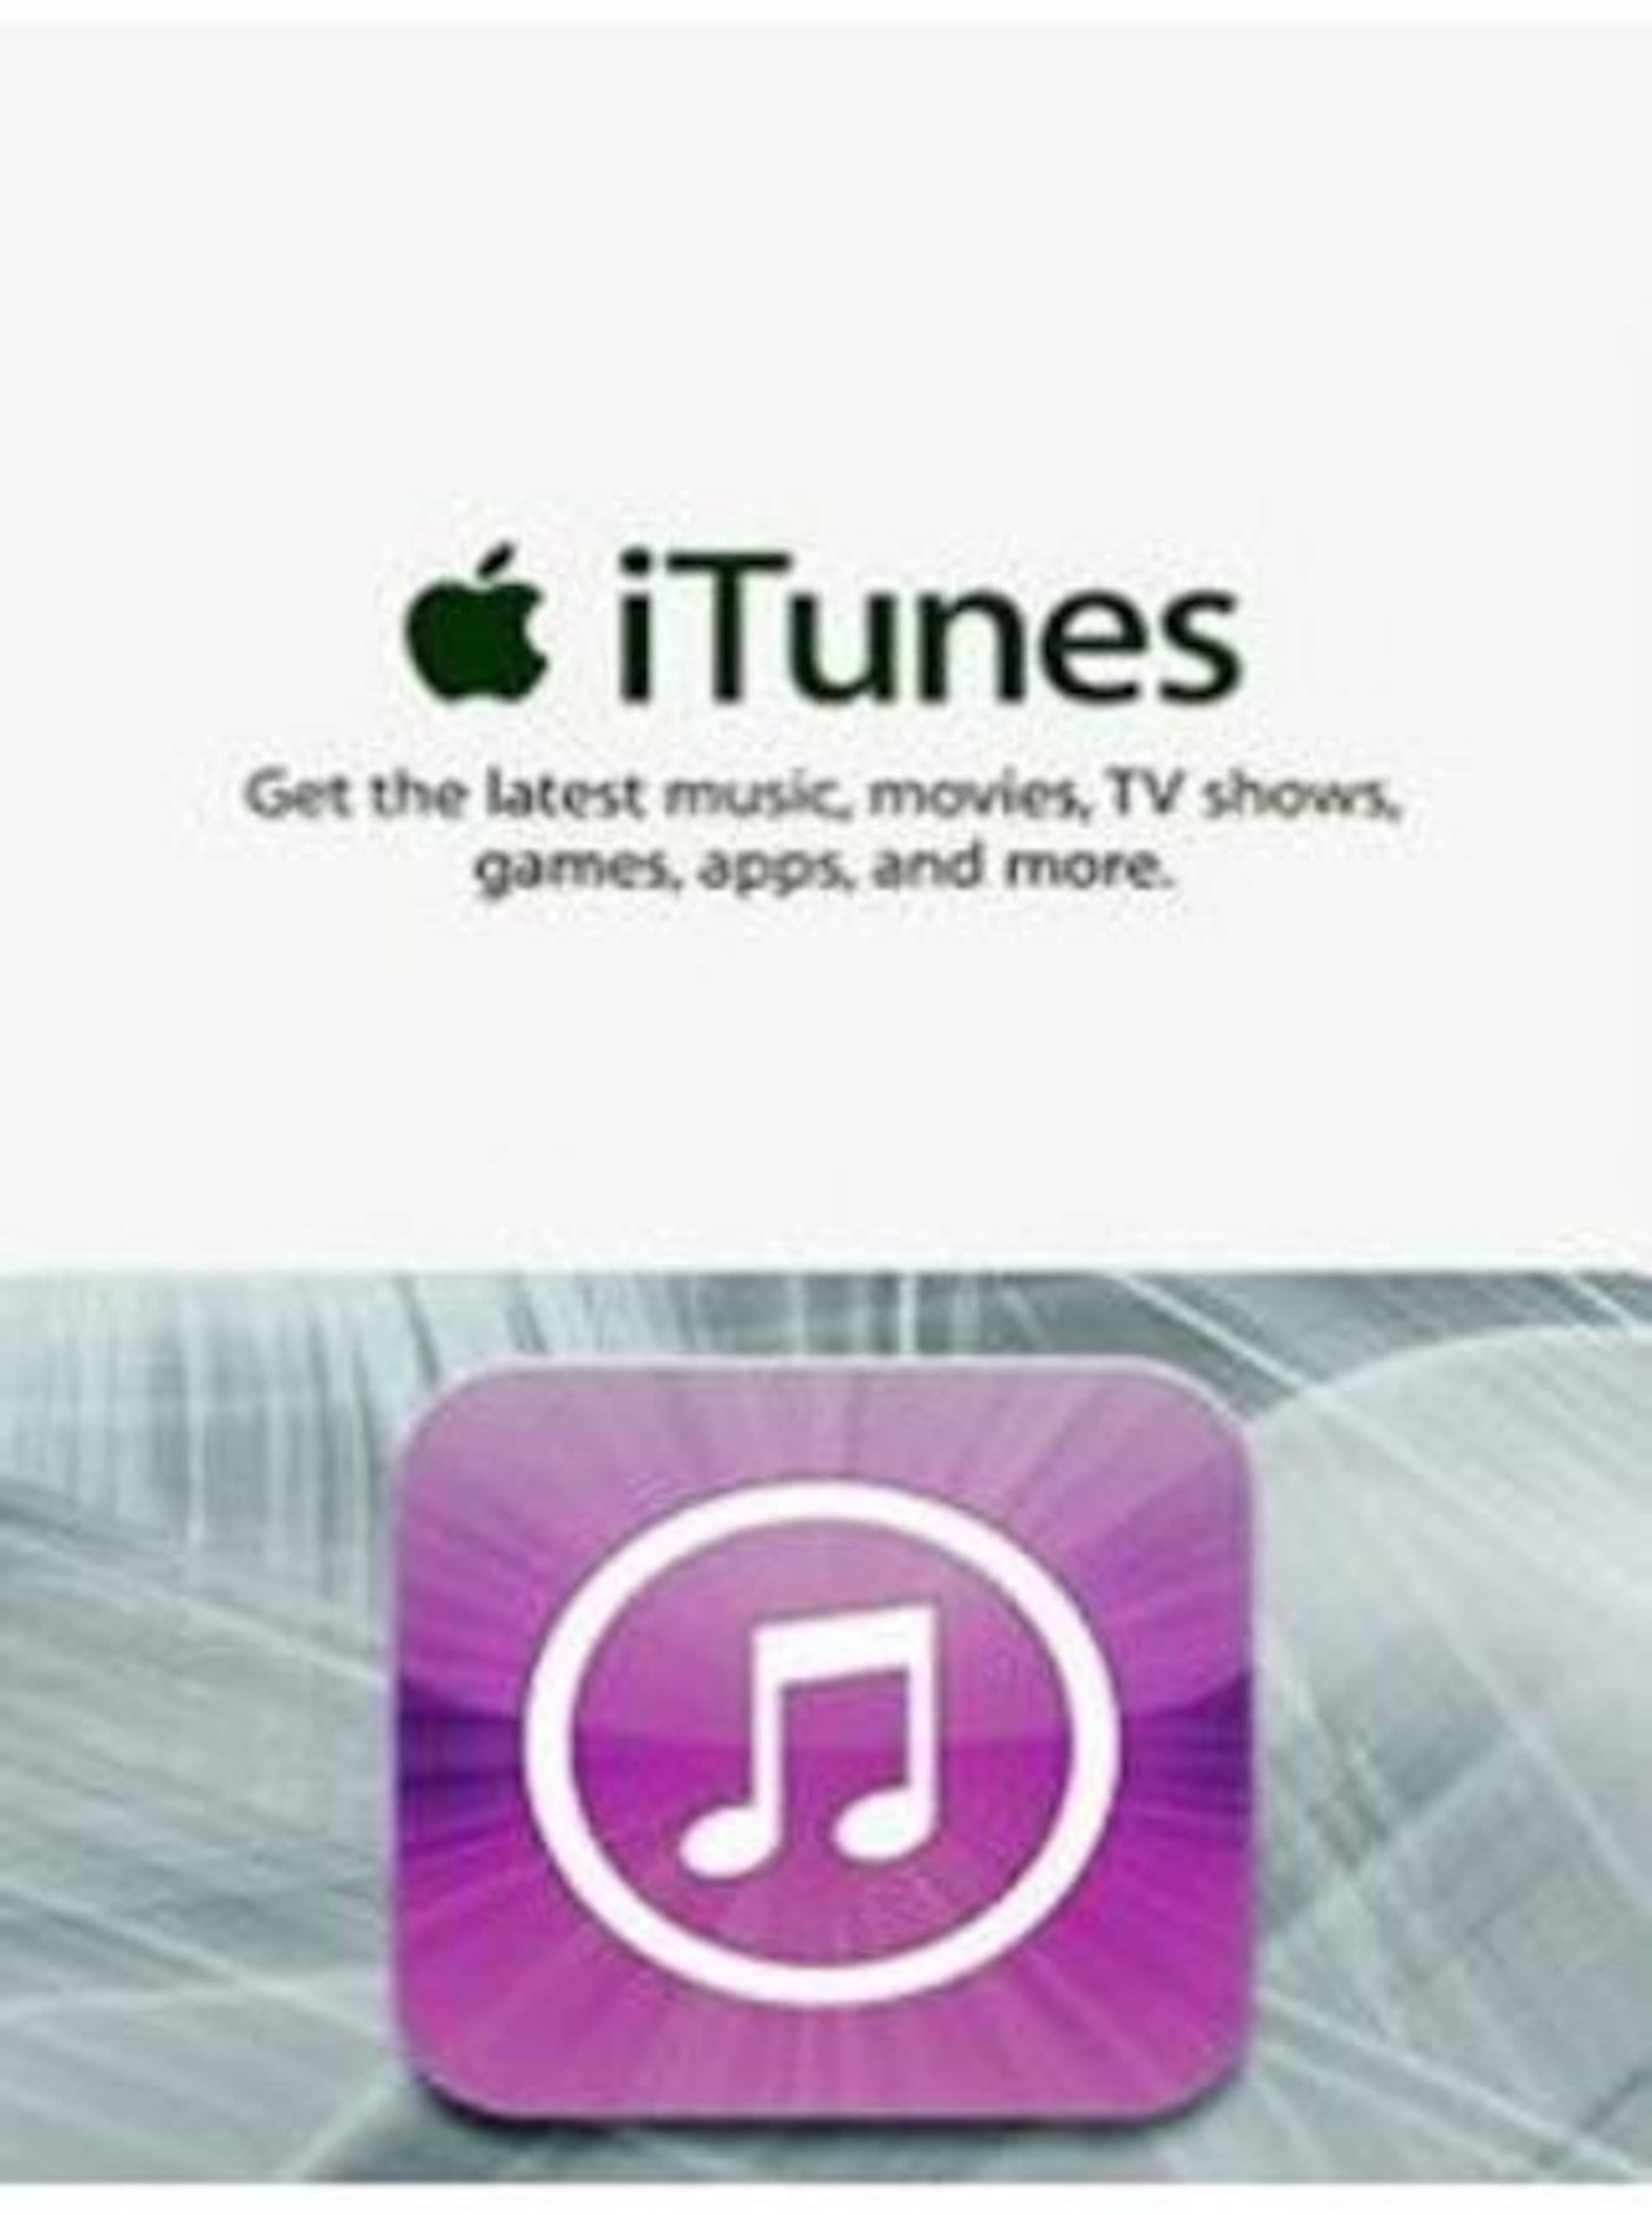 USD iTunes Buy Gift Card 10 (US) Apple